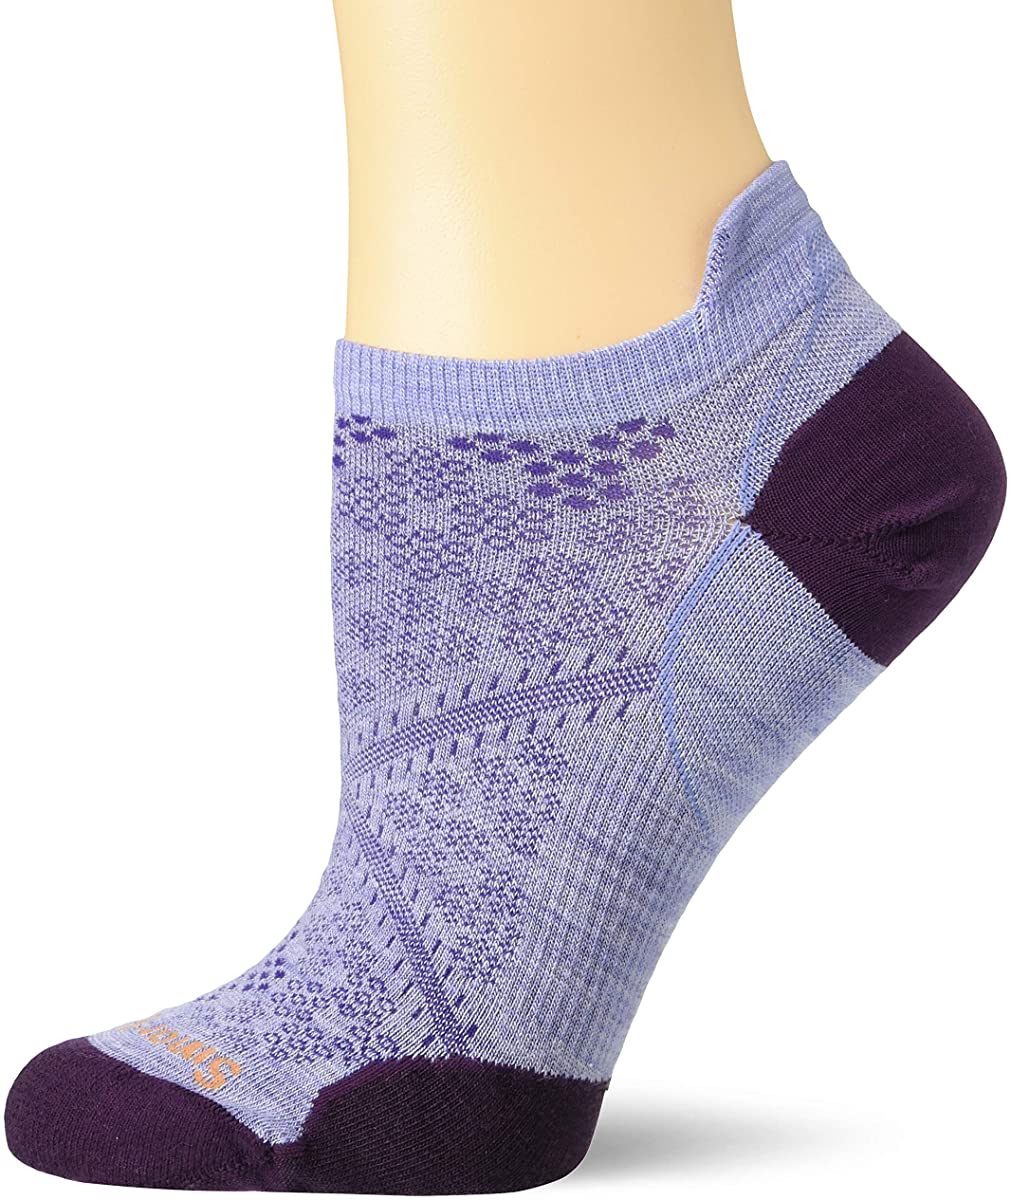 Women's Smartwool PhD Run Ultra Light Micro Socks in Purple Mist from the front view